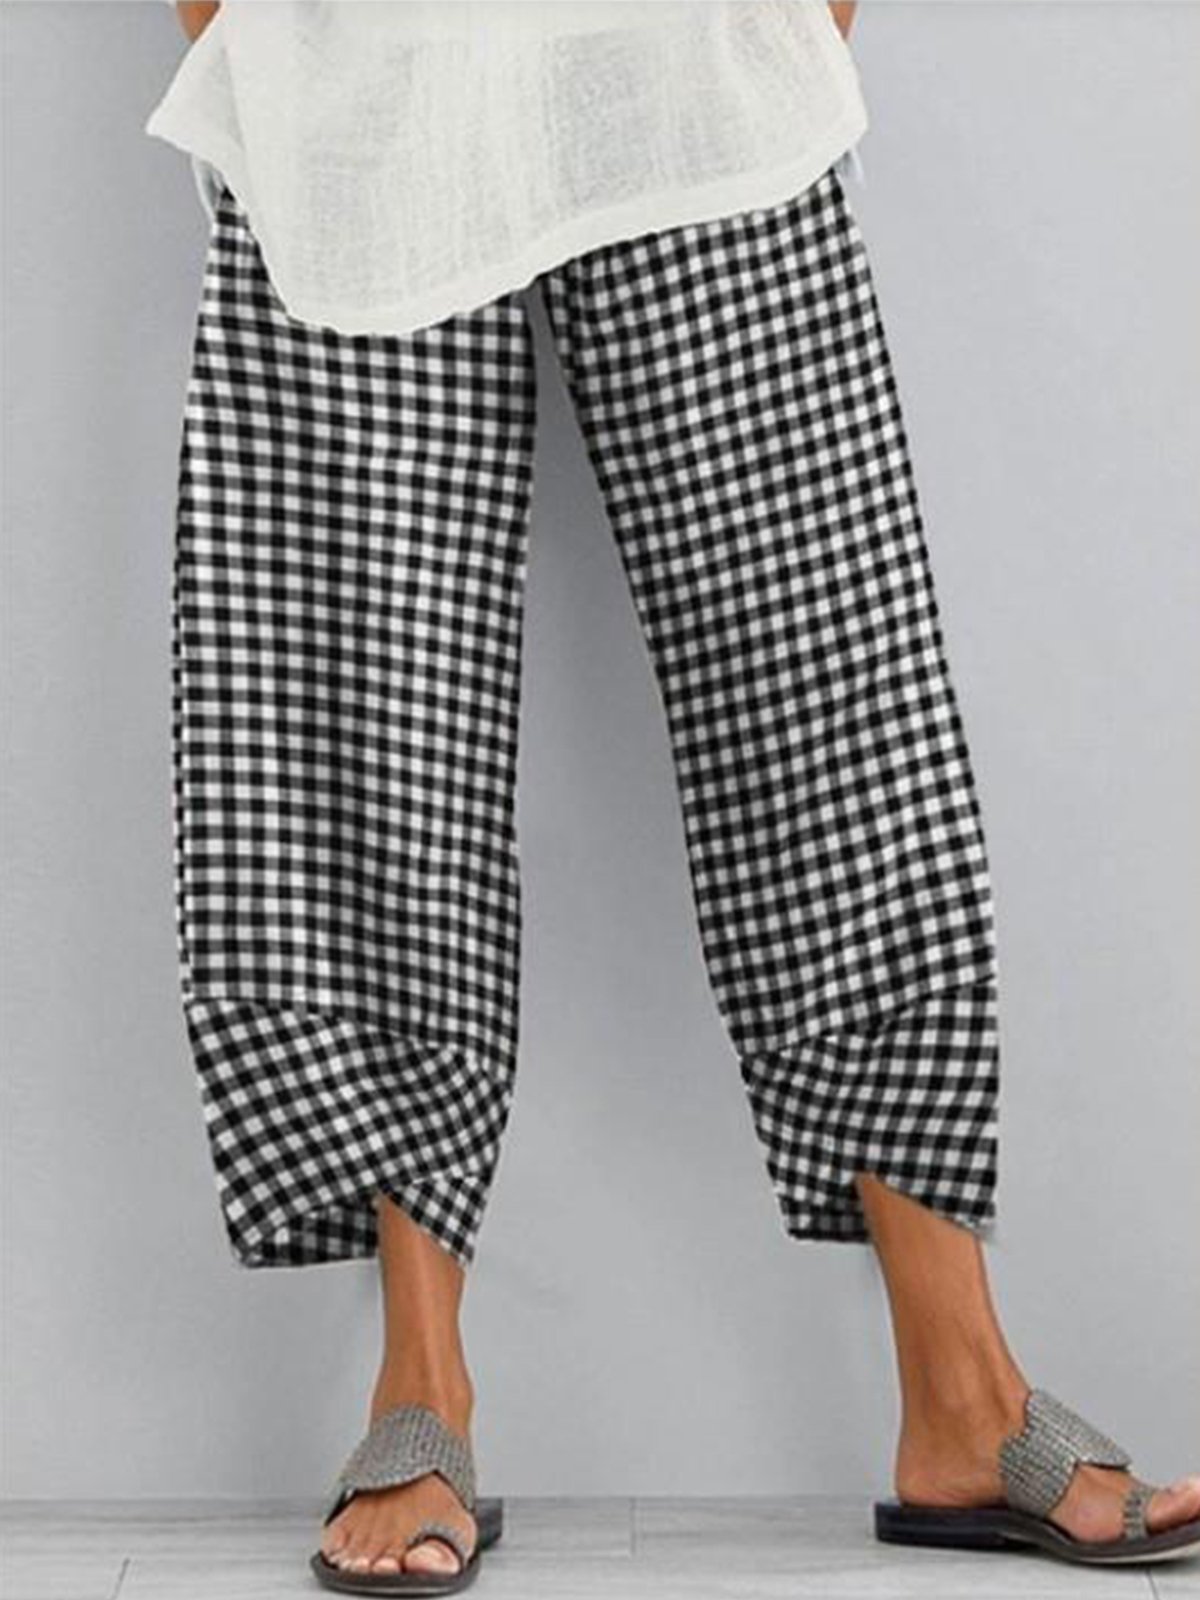 Classic black and white grid texture casual pants radish pants